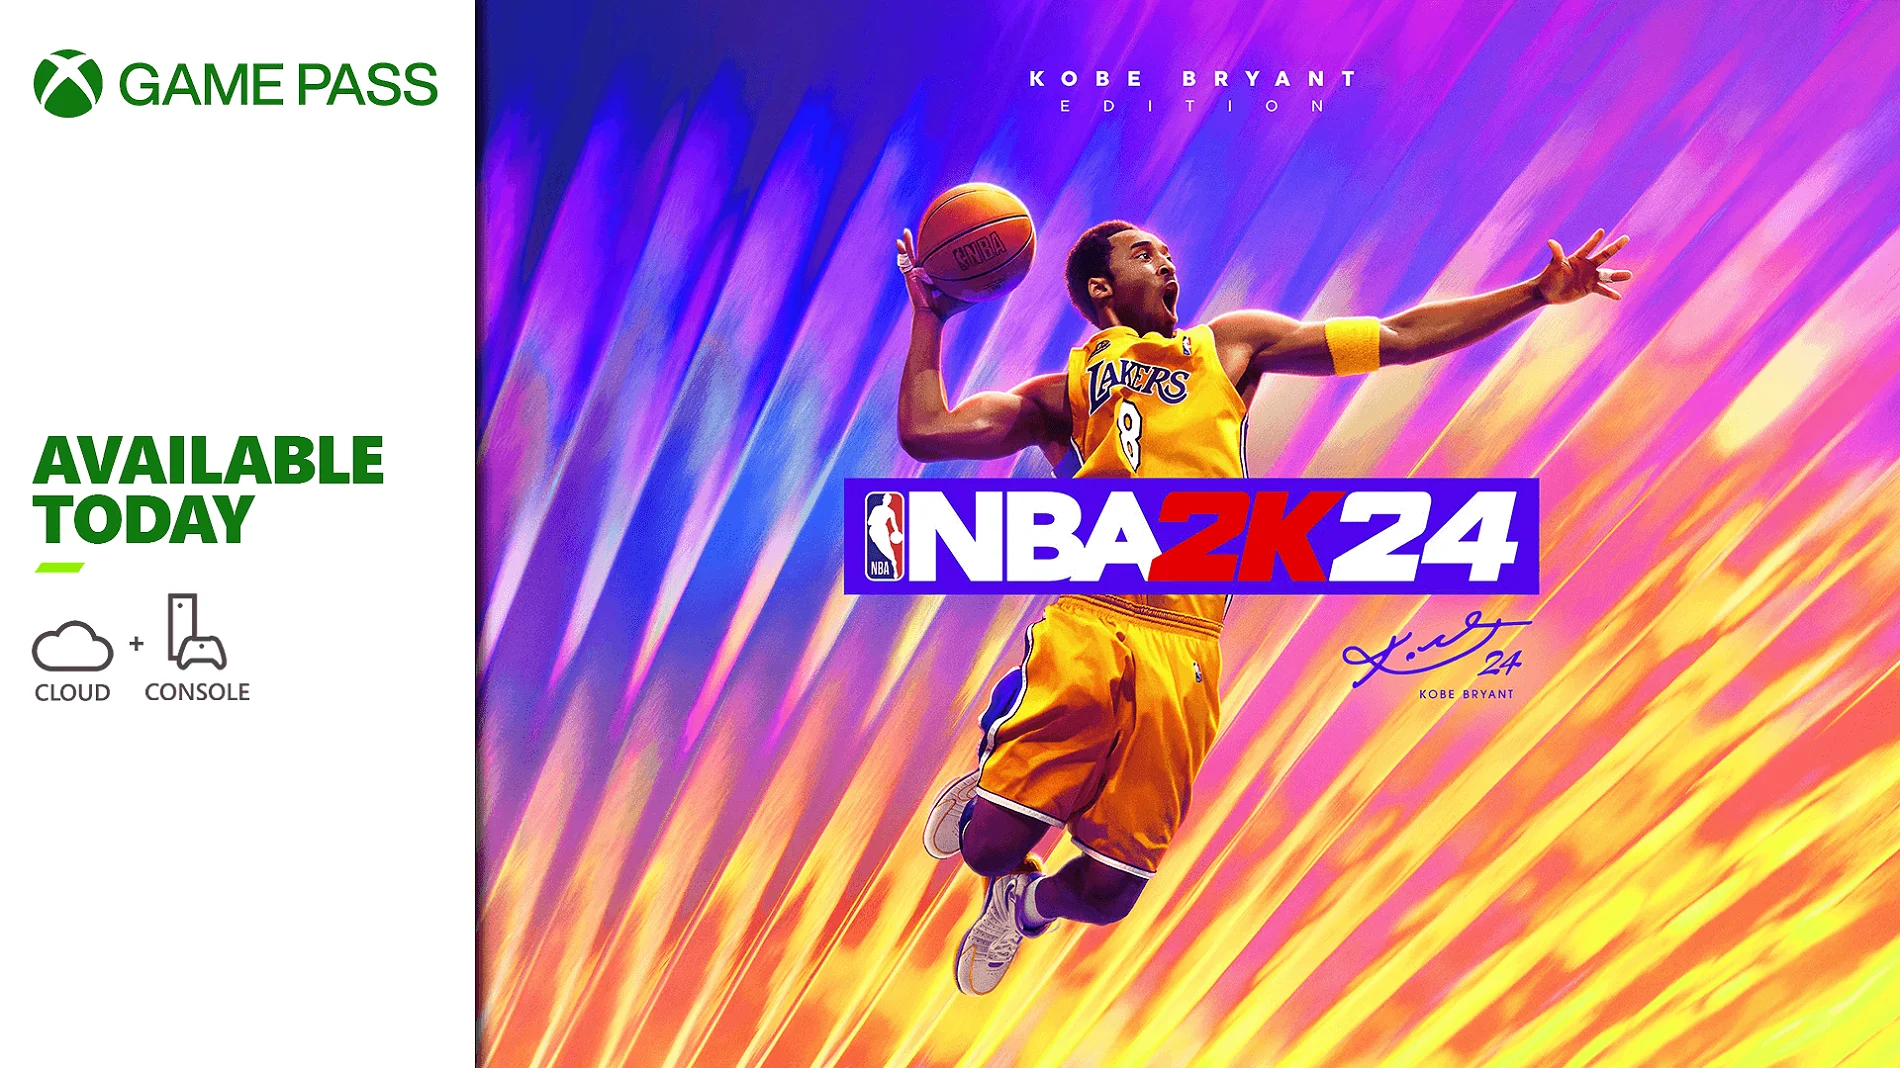 Cимулятор баскетбола NBA 2K24 добавили в Xbox Game Pass - фото 1